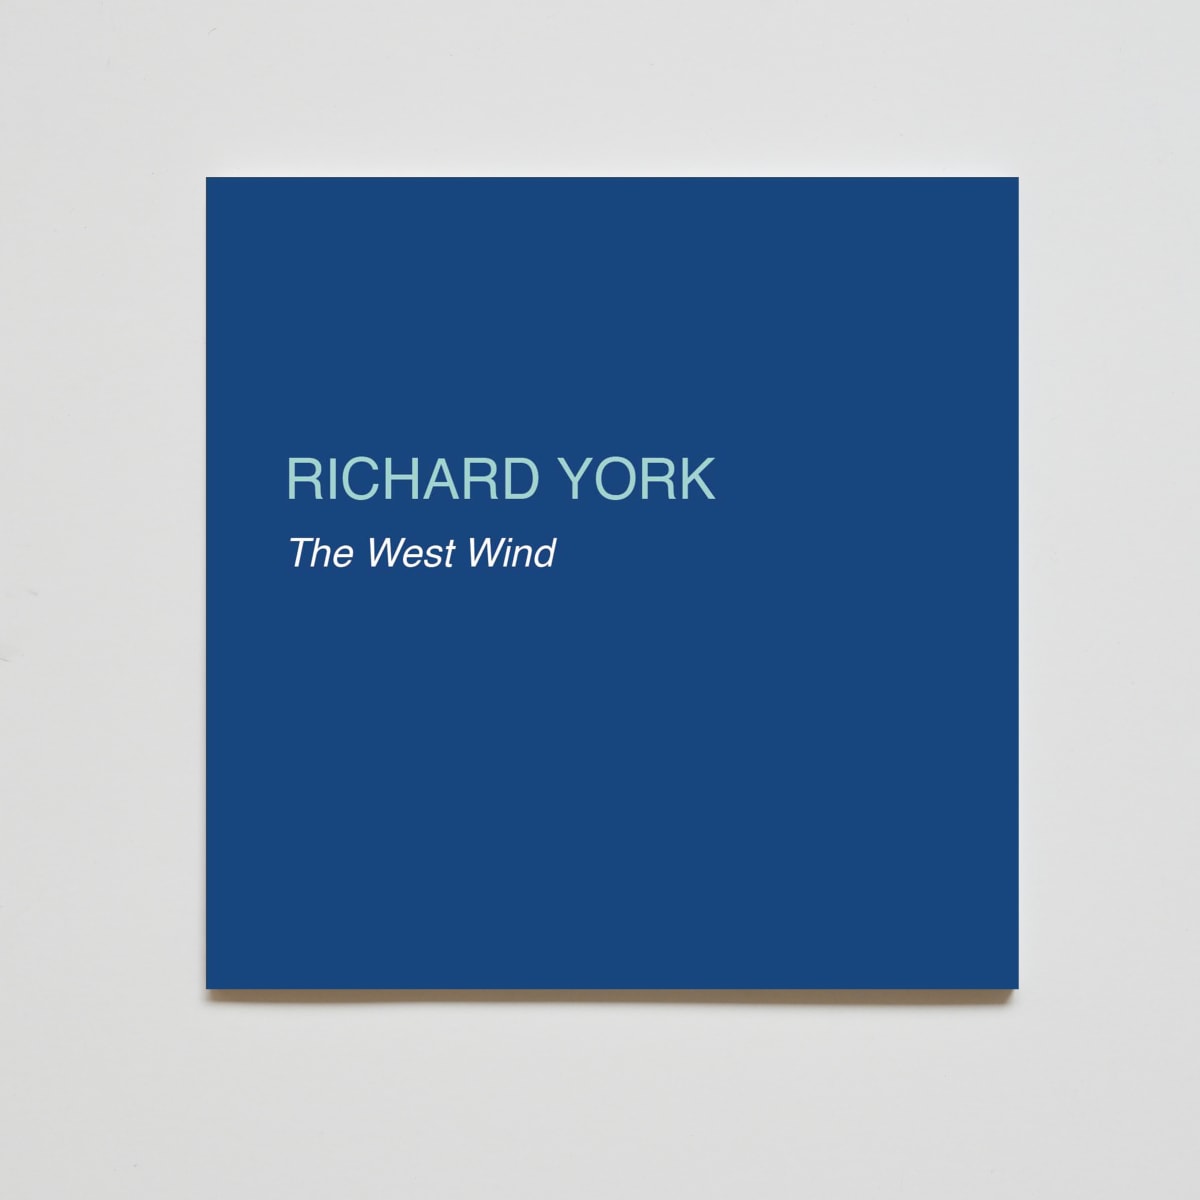 Richard York